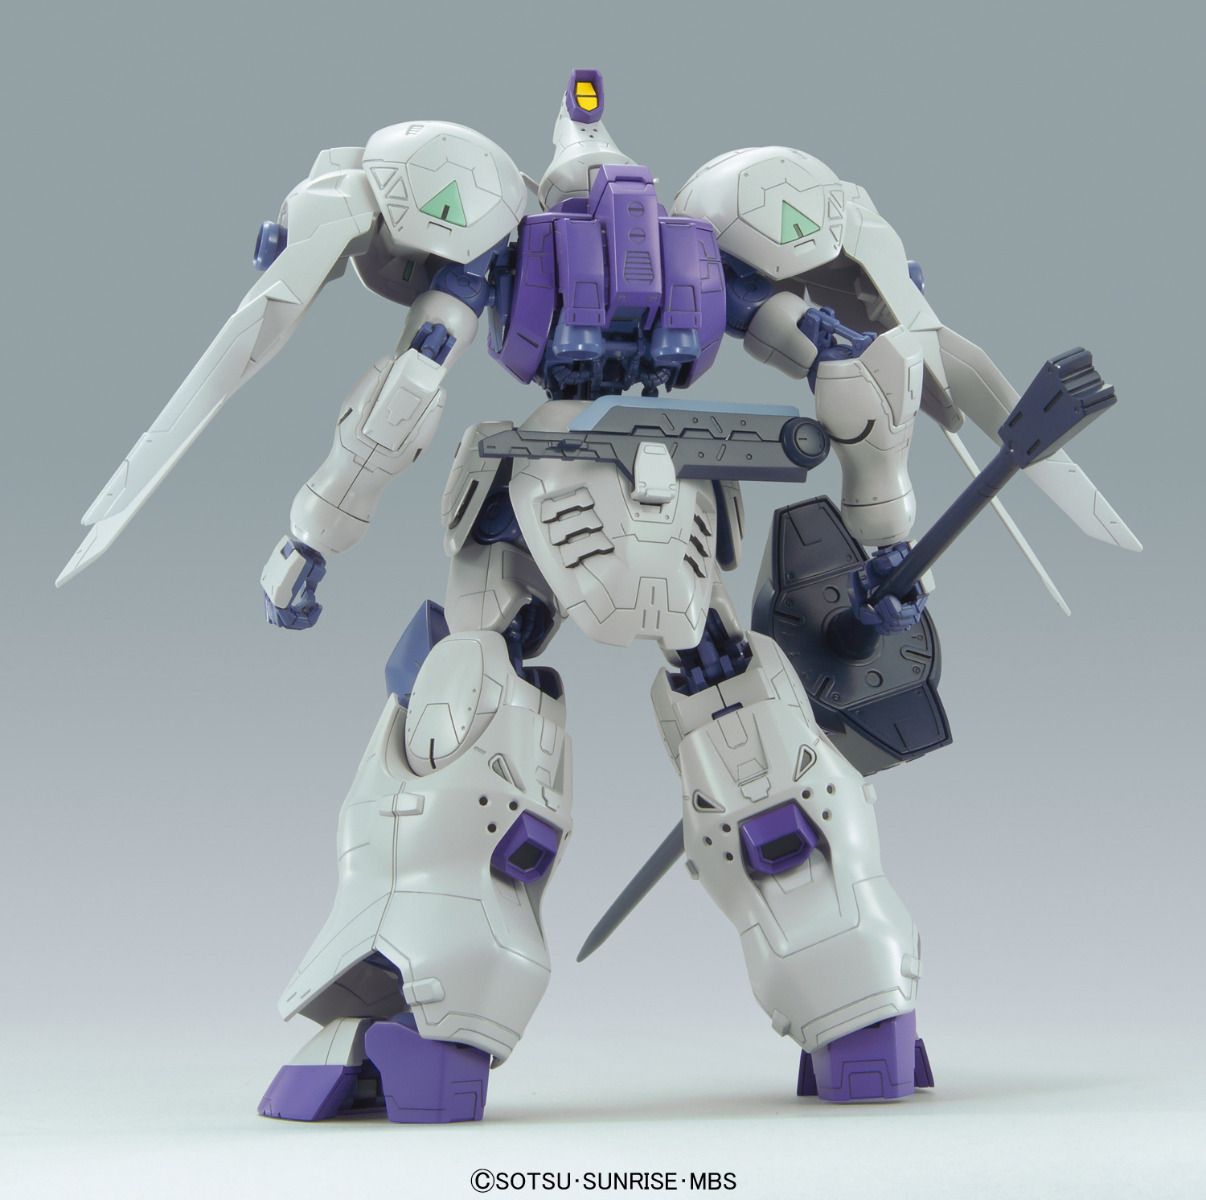 FM - ASW-G-66 Gundam Kimaris Booster Unit Type